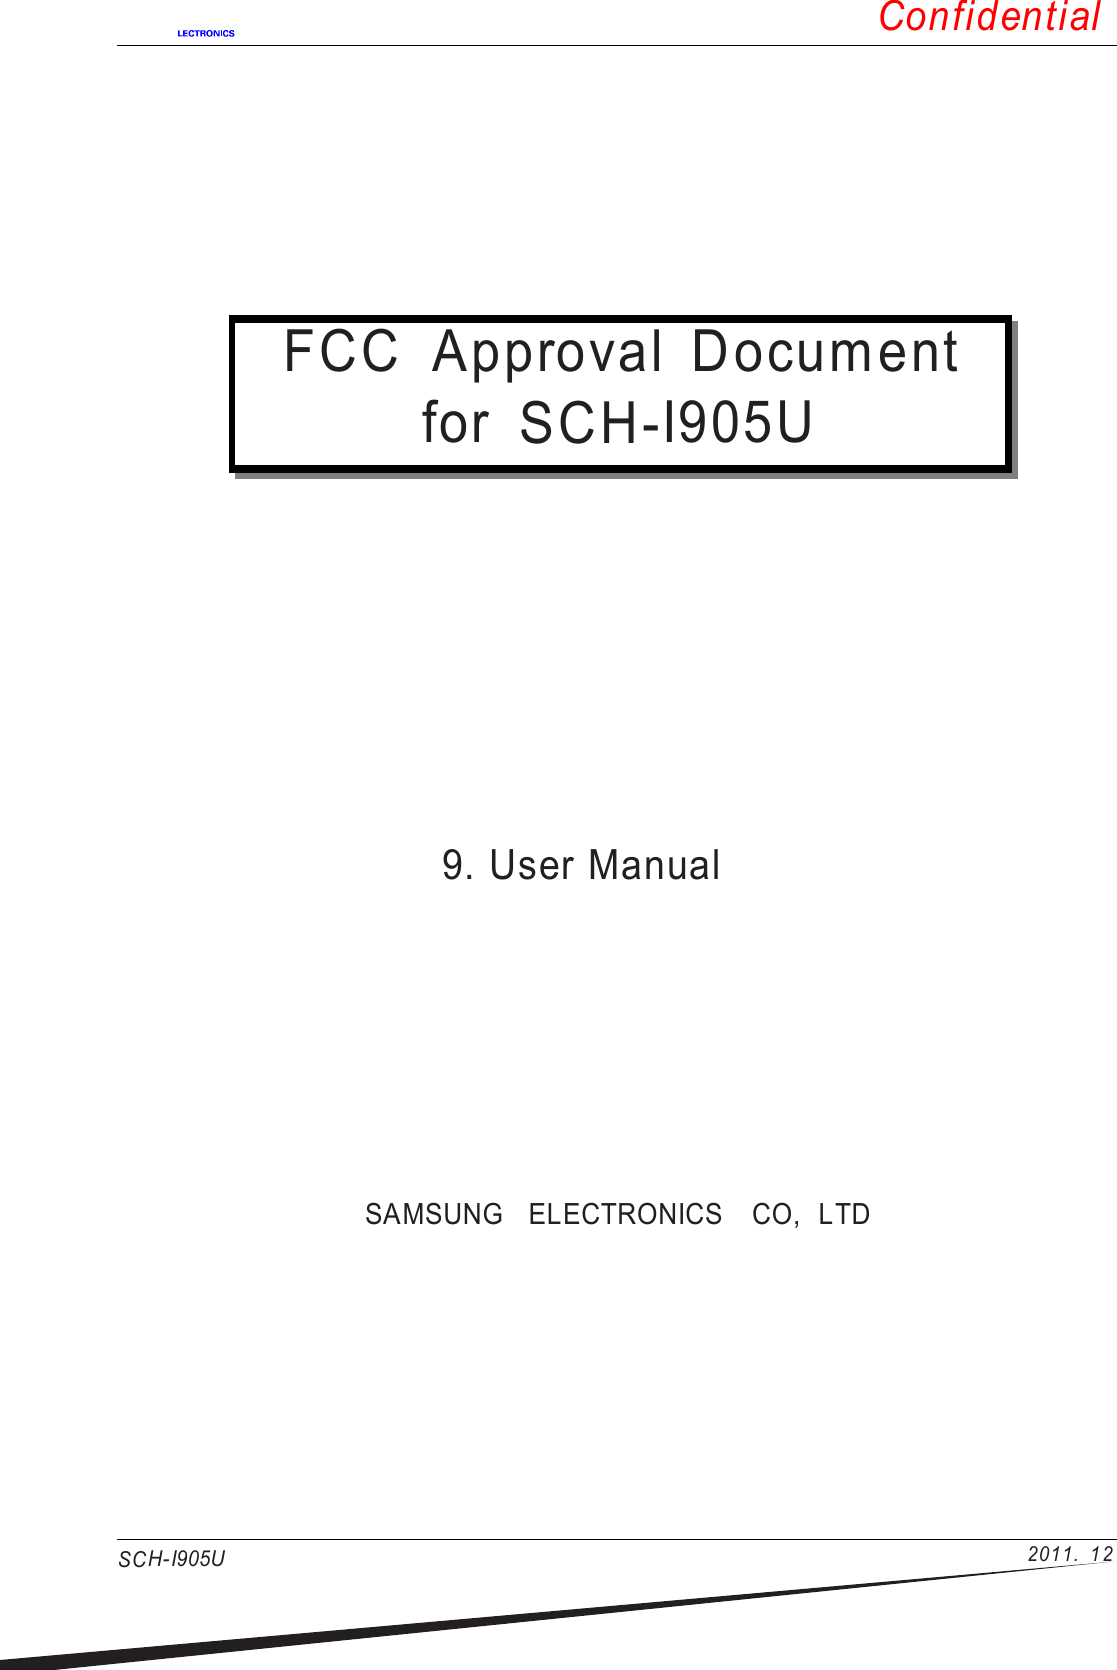 ConfidentialSCH-I905U 2011. 1 2FCC Approval Documentfor SCH-I905U9. User ManualSAMSUNG ELECTRONICS CO, LTD